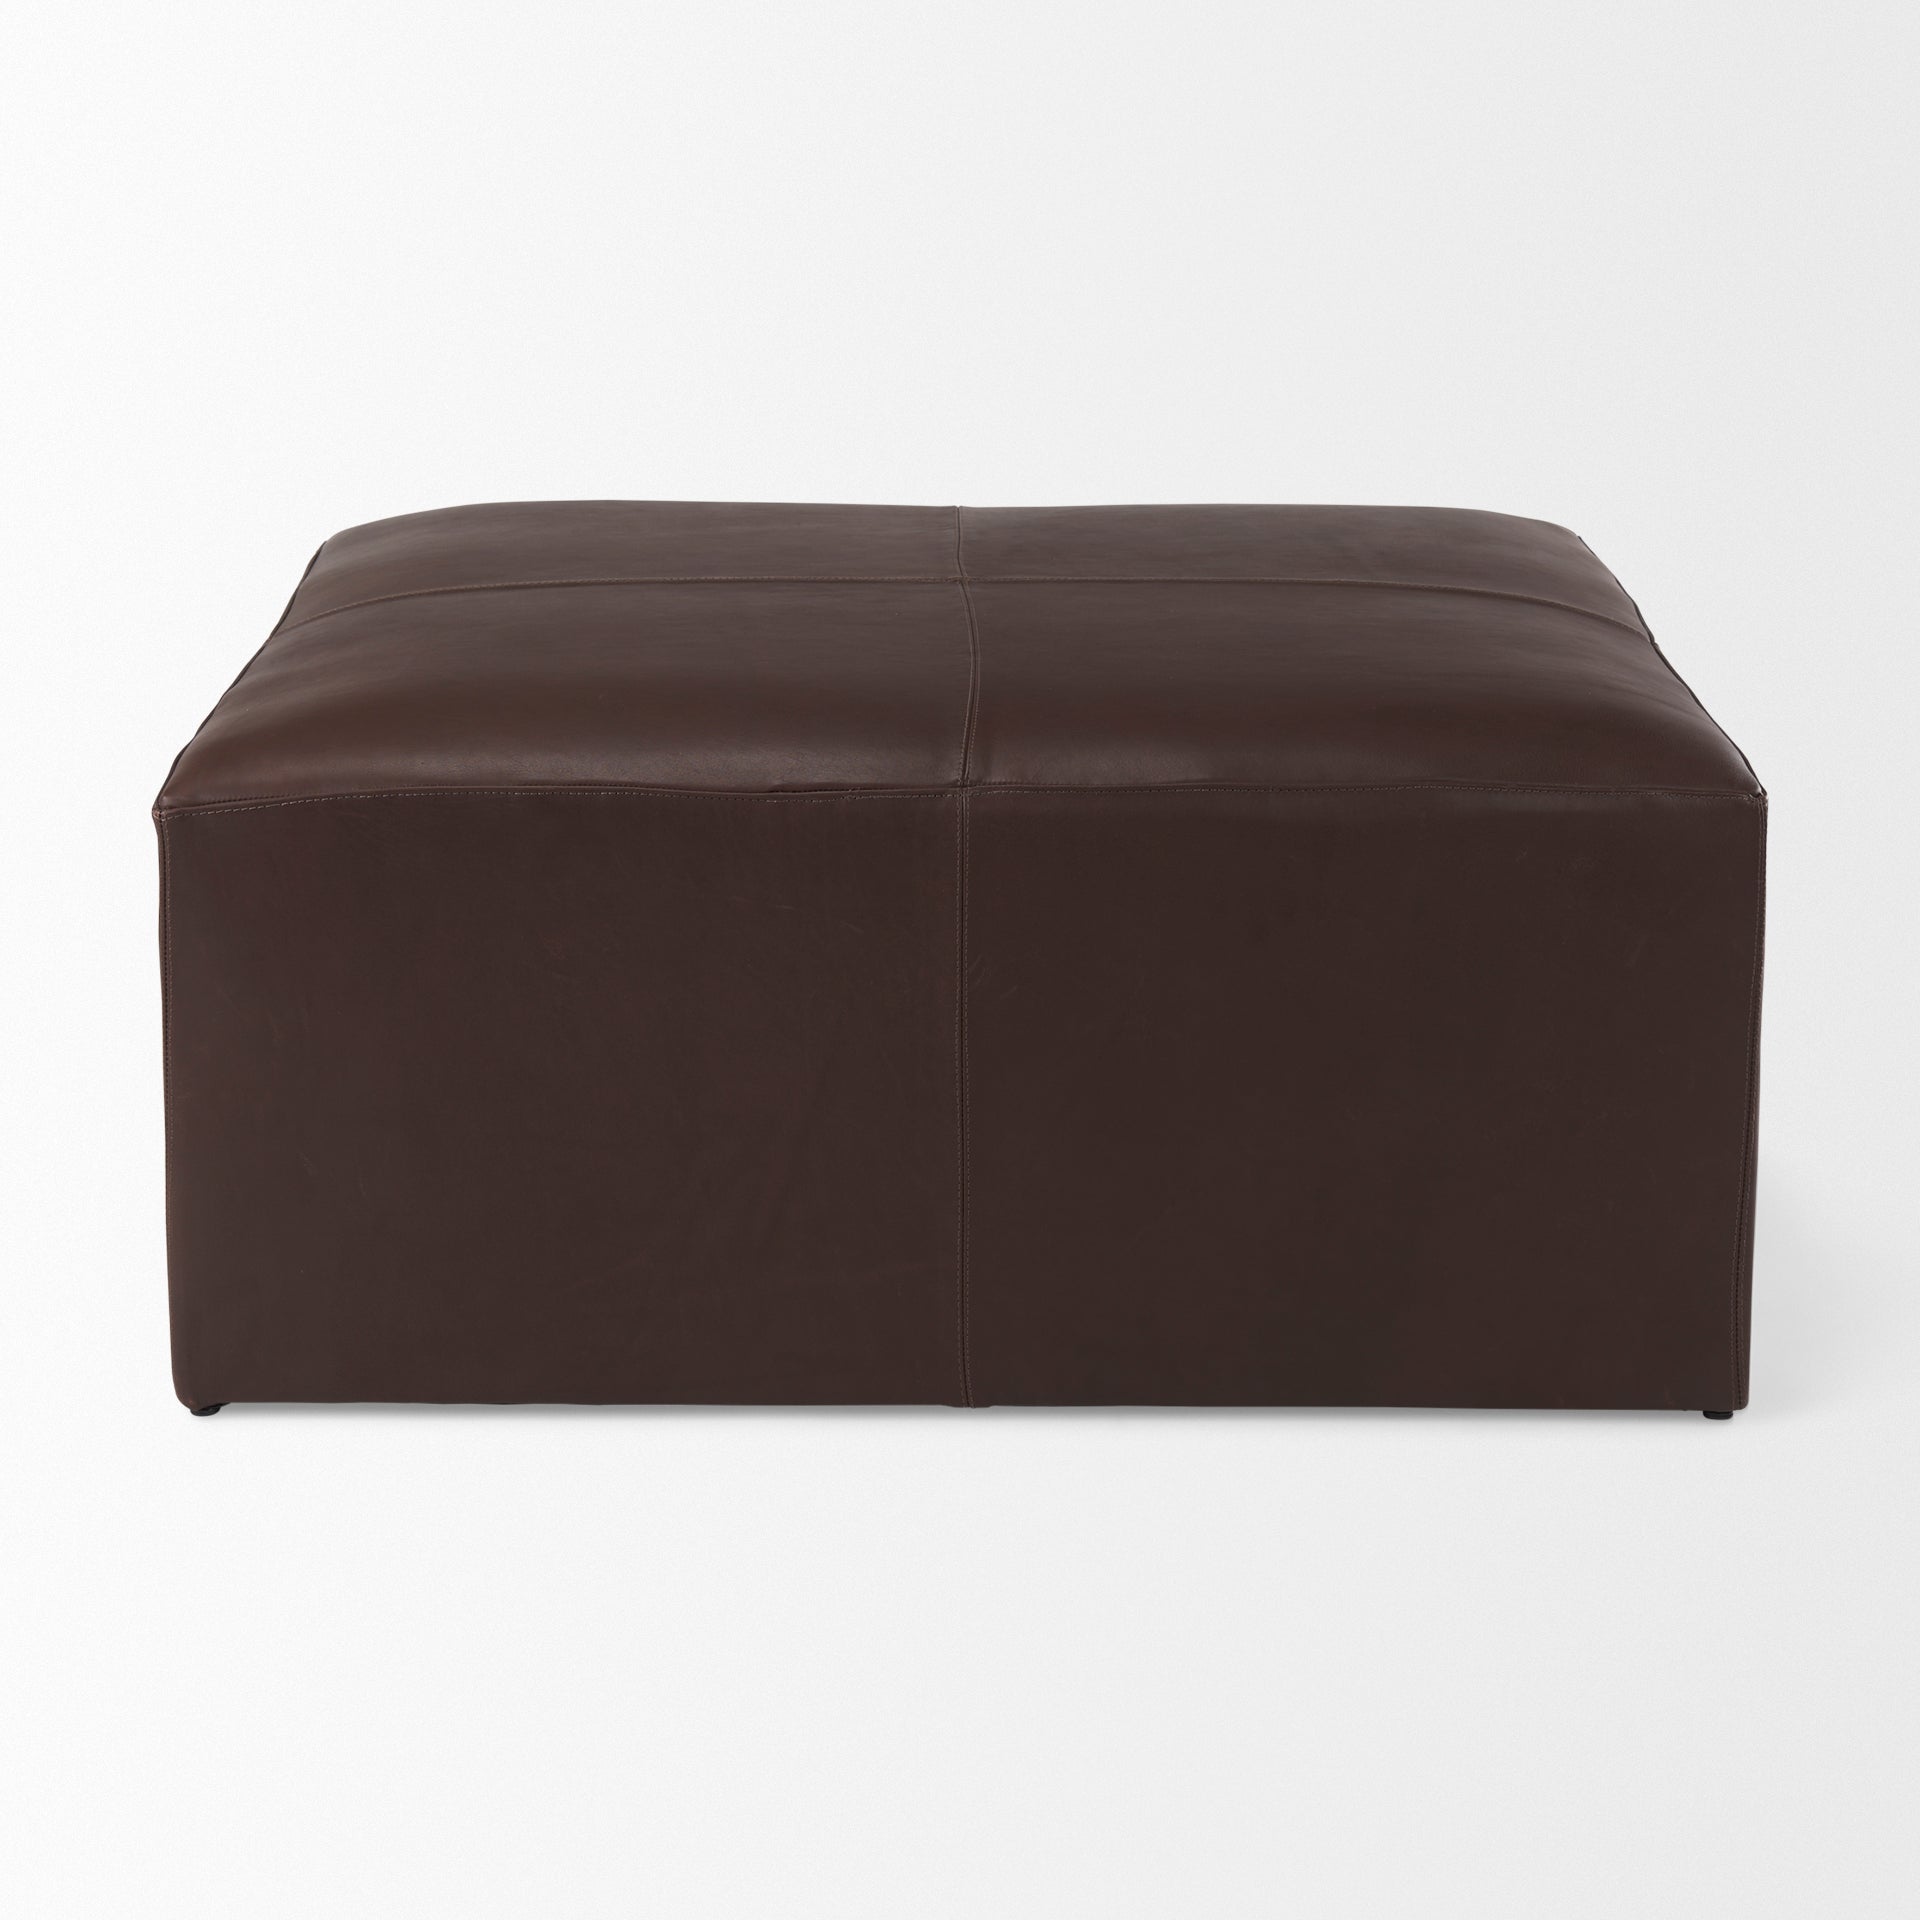 Minara Leather Ottoman | Coffee Table- Dark Brown Leather